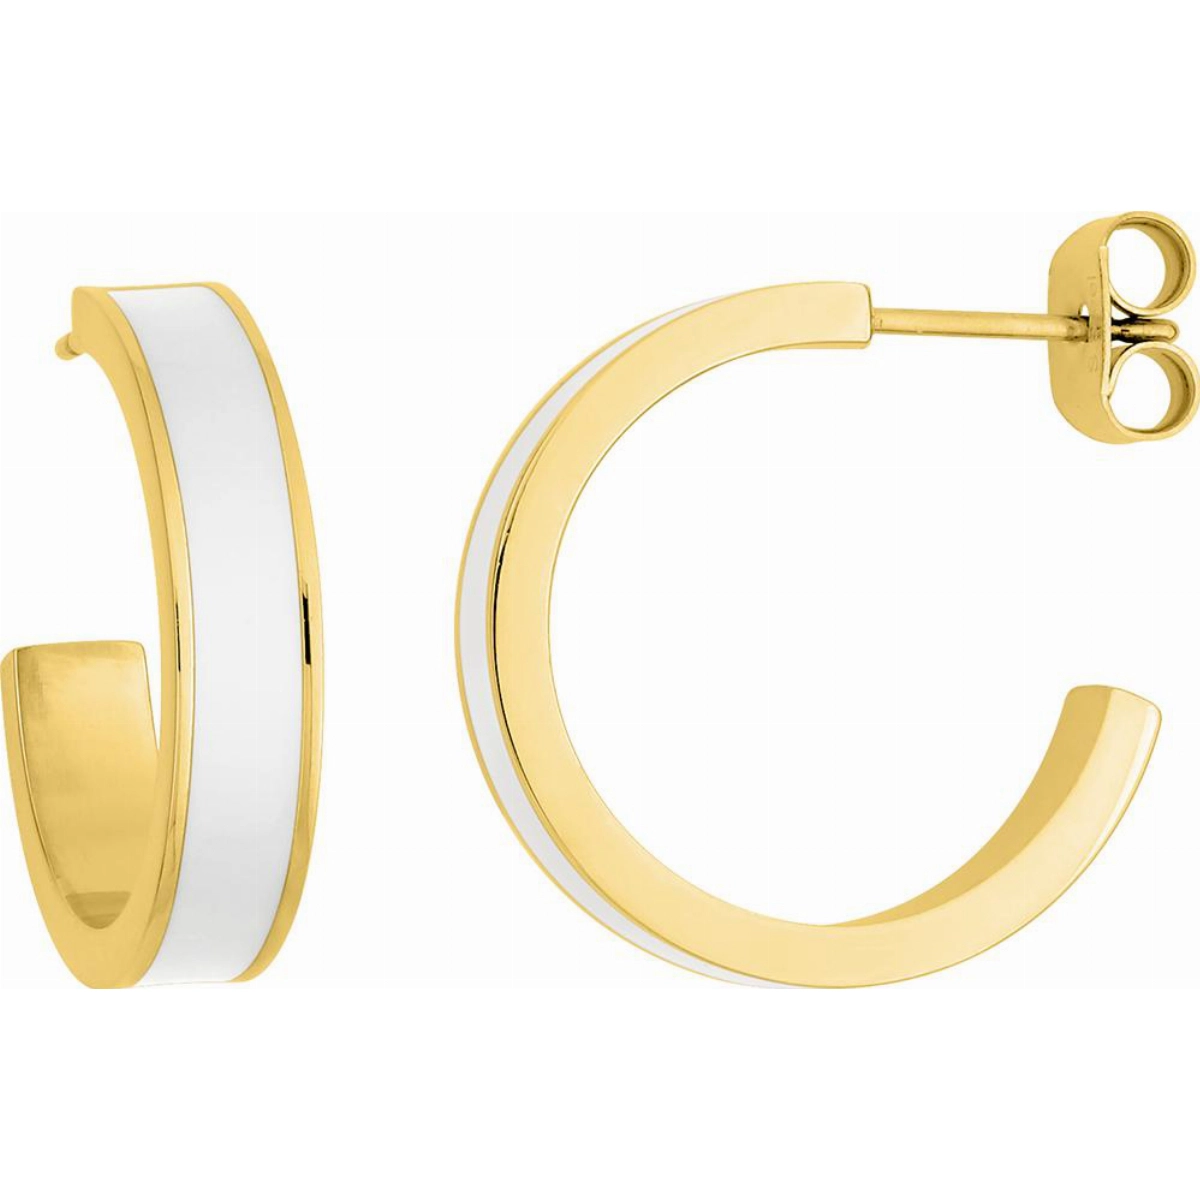 Earrings pair gold colored st.Steel Lua Blanca  558036